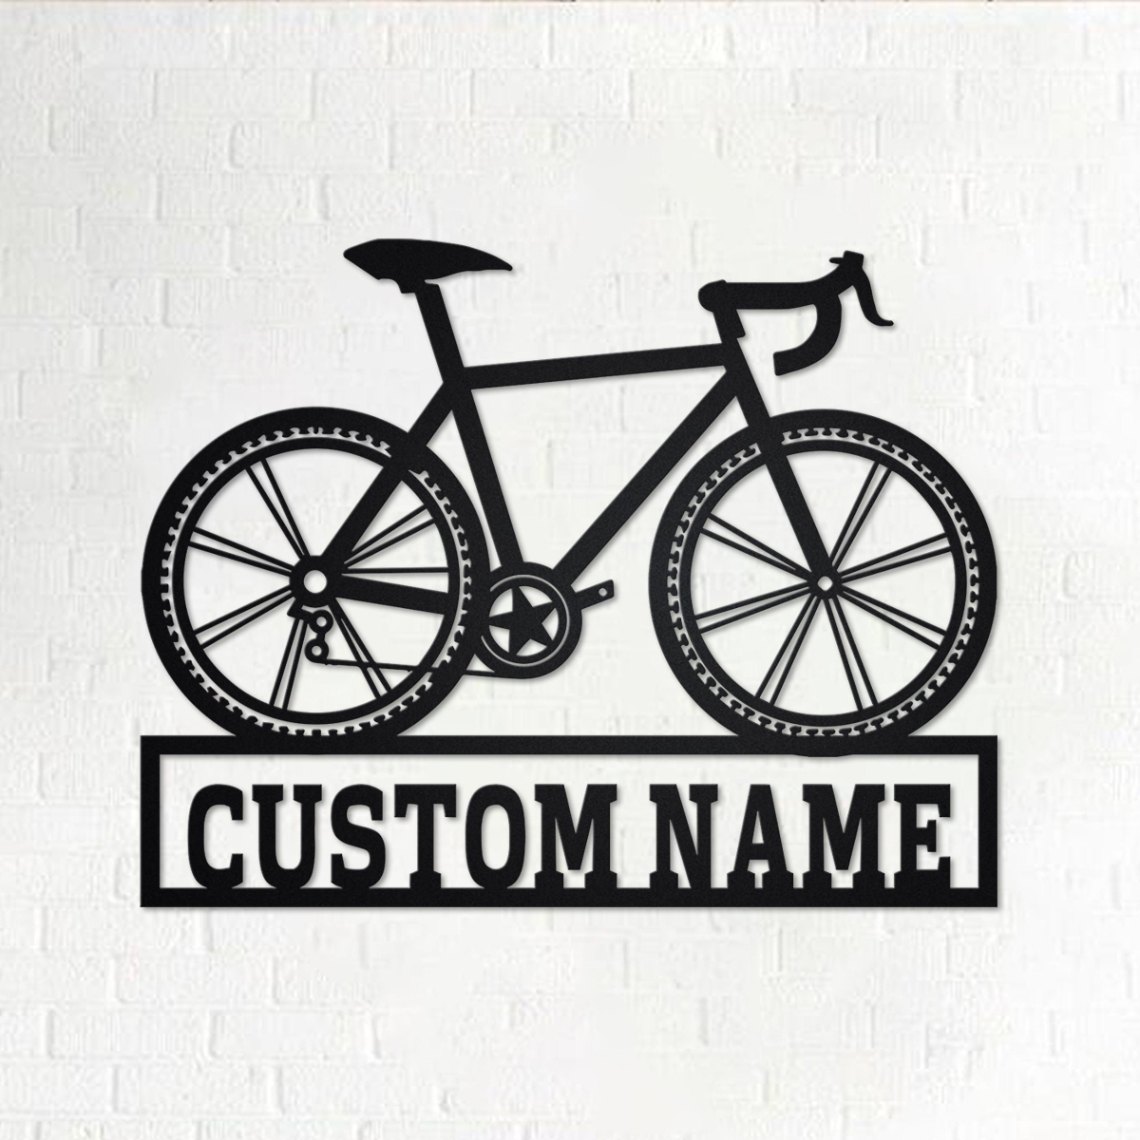 Personalized Bicycle Metal Sign, Bicycle Metal Wall Art, Bicycle Metal Wall Decor, Bicycle Lover, Custom Bicycle